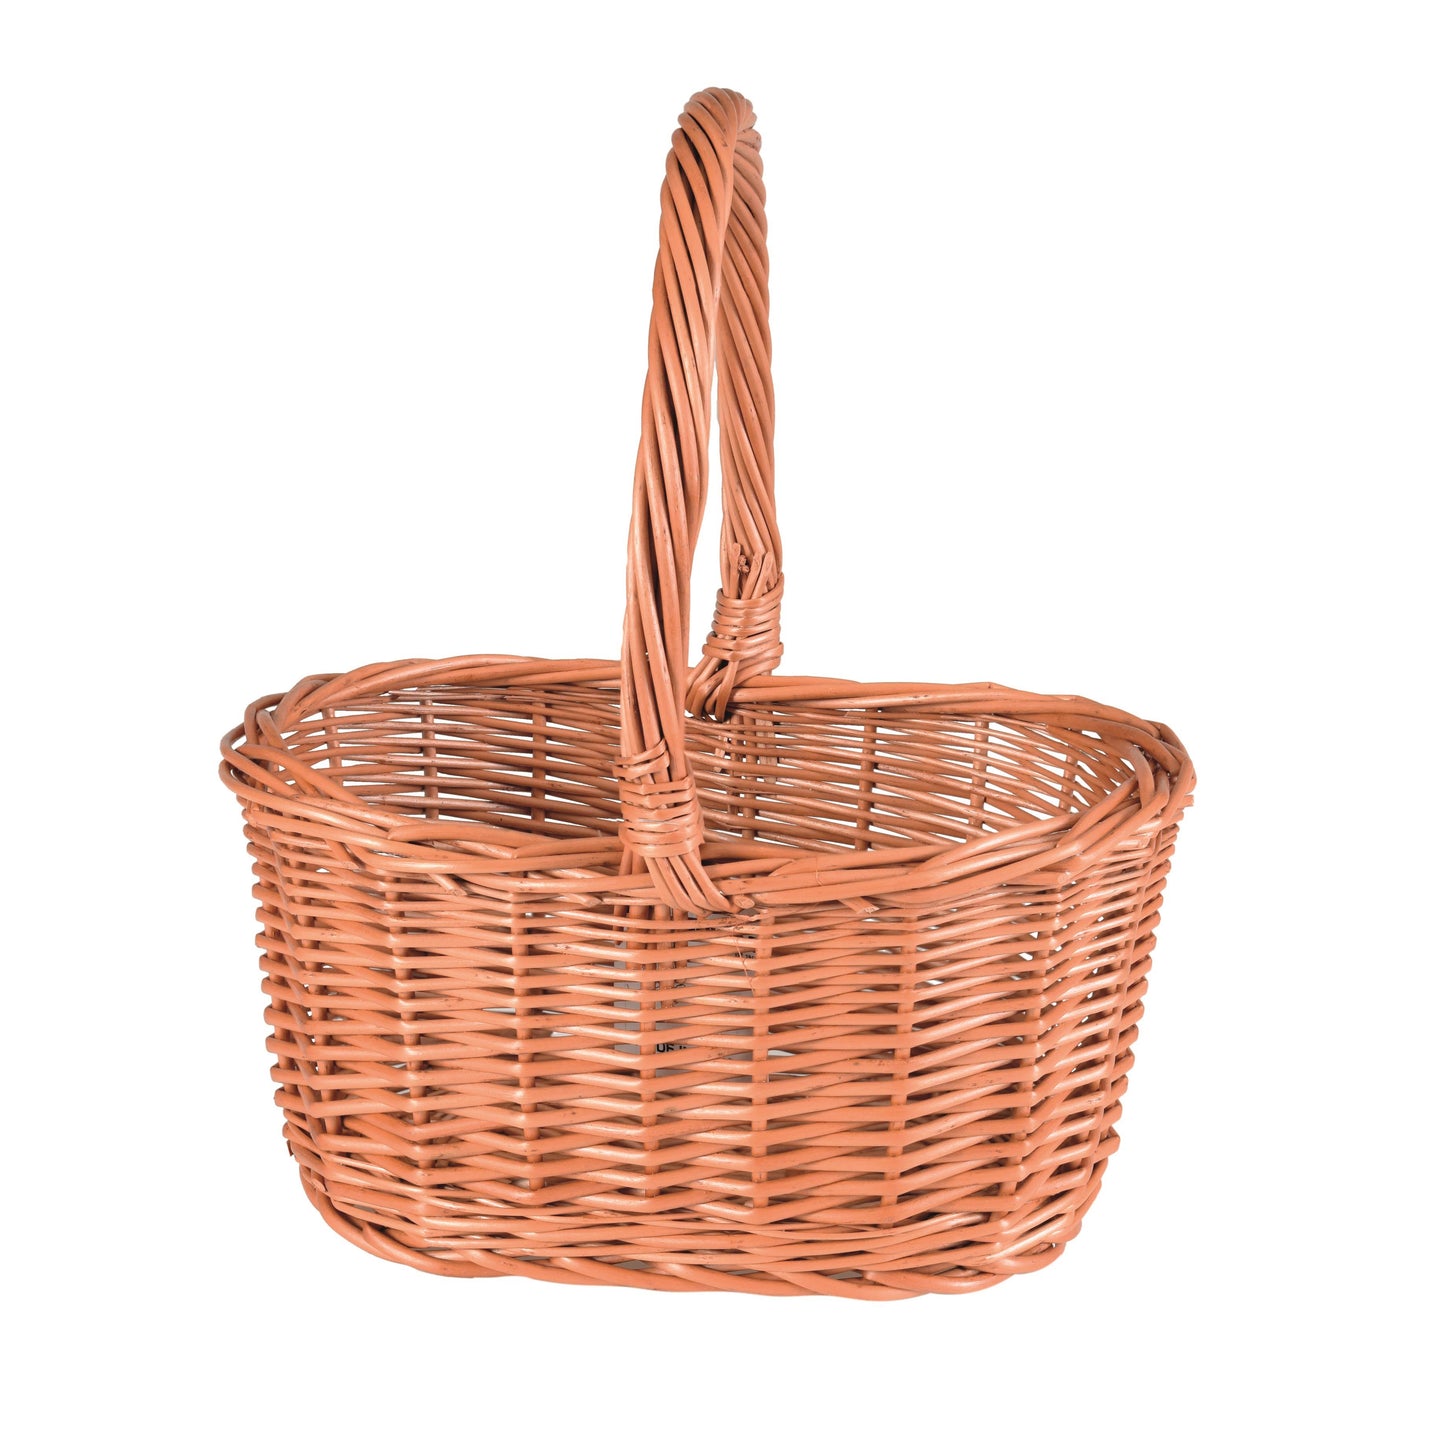 Egmont - Wicker Basket with Big Handle